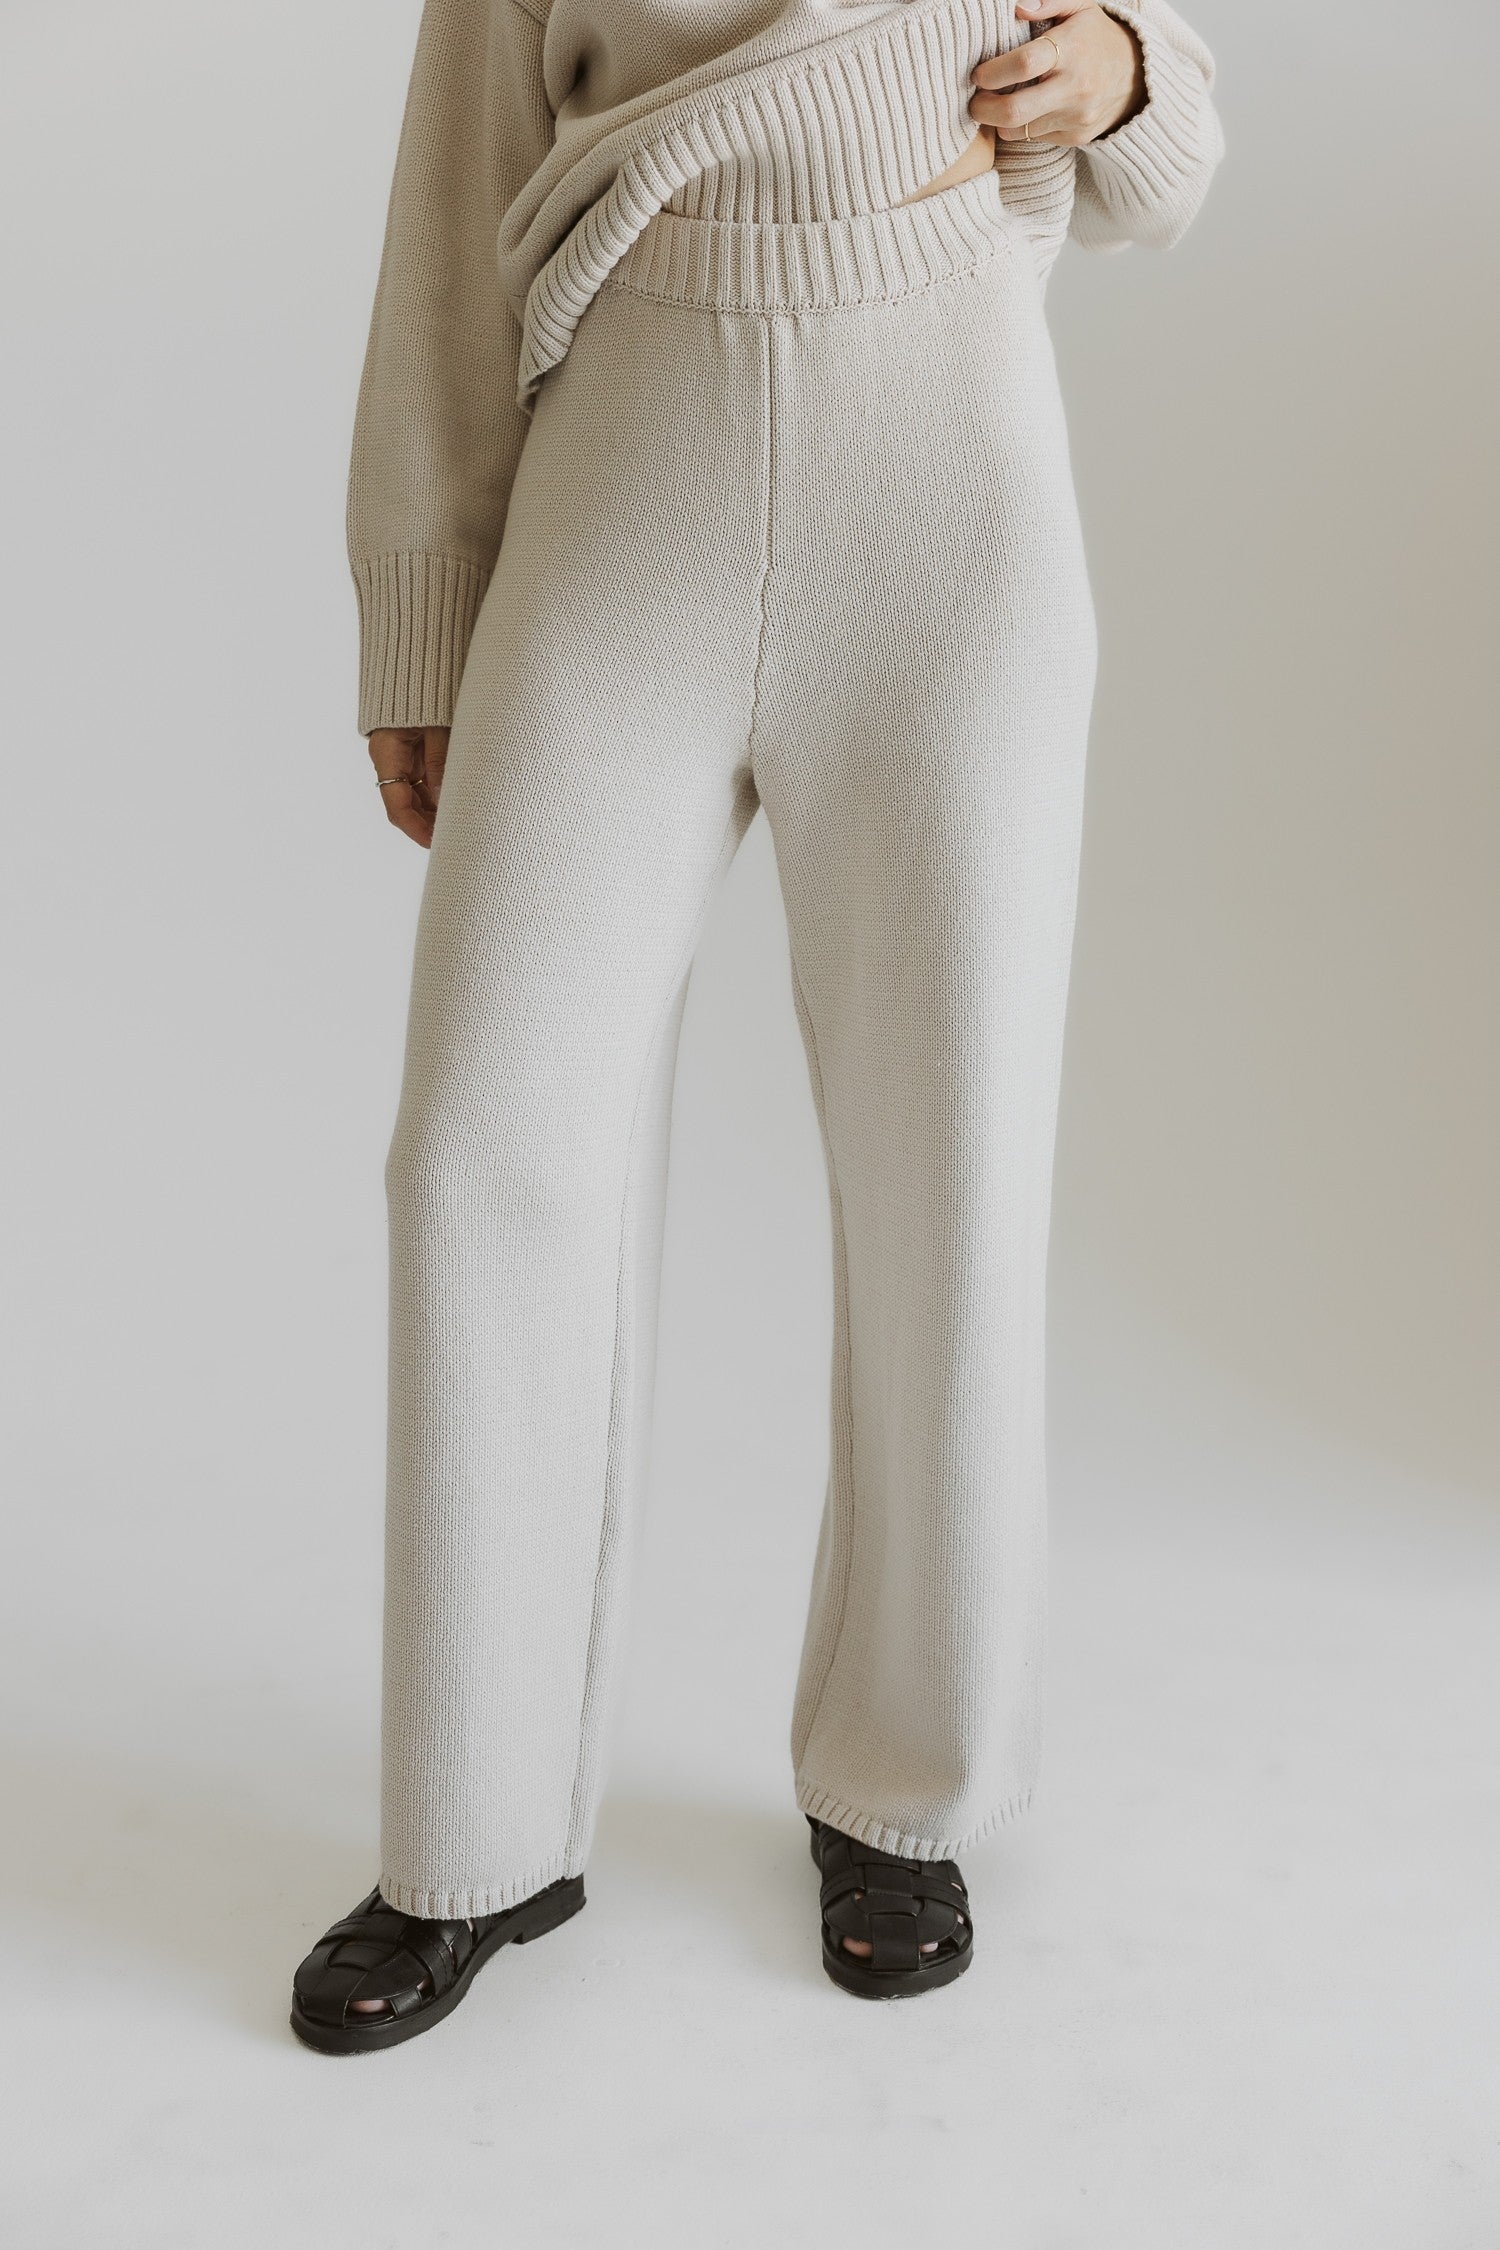 Phoebe Sweater Pants